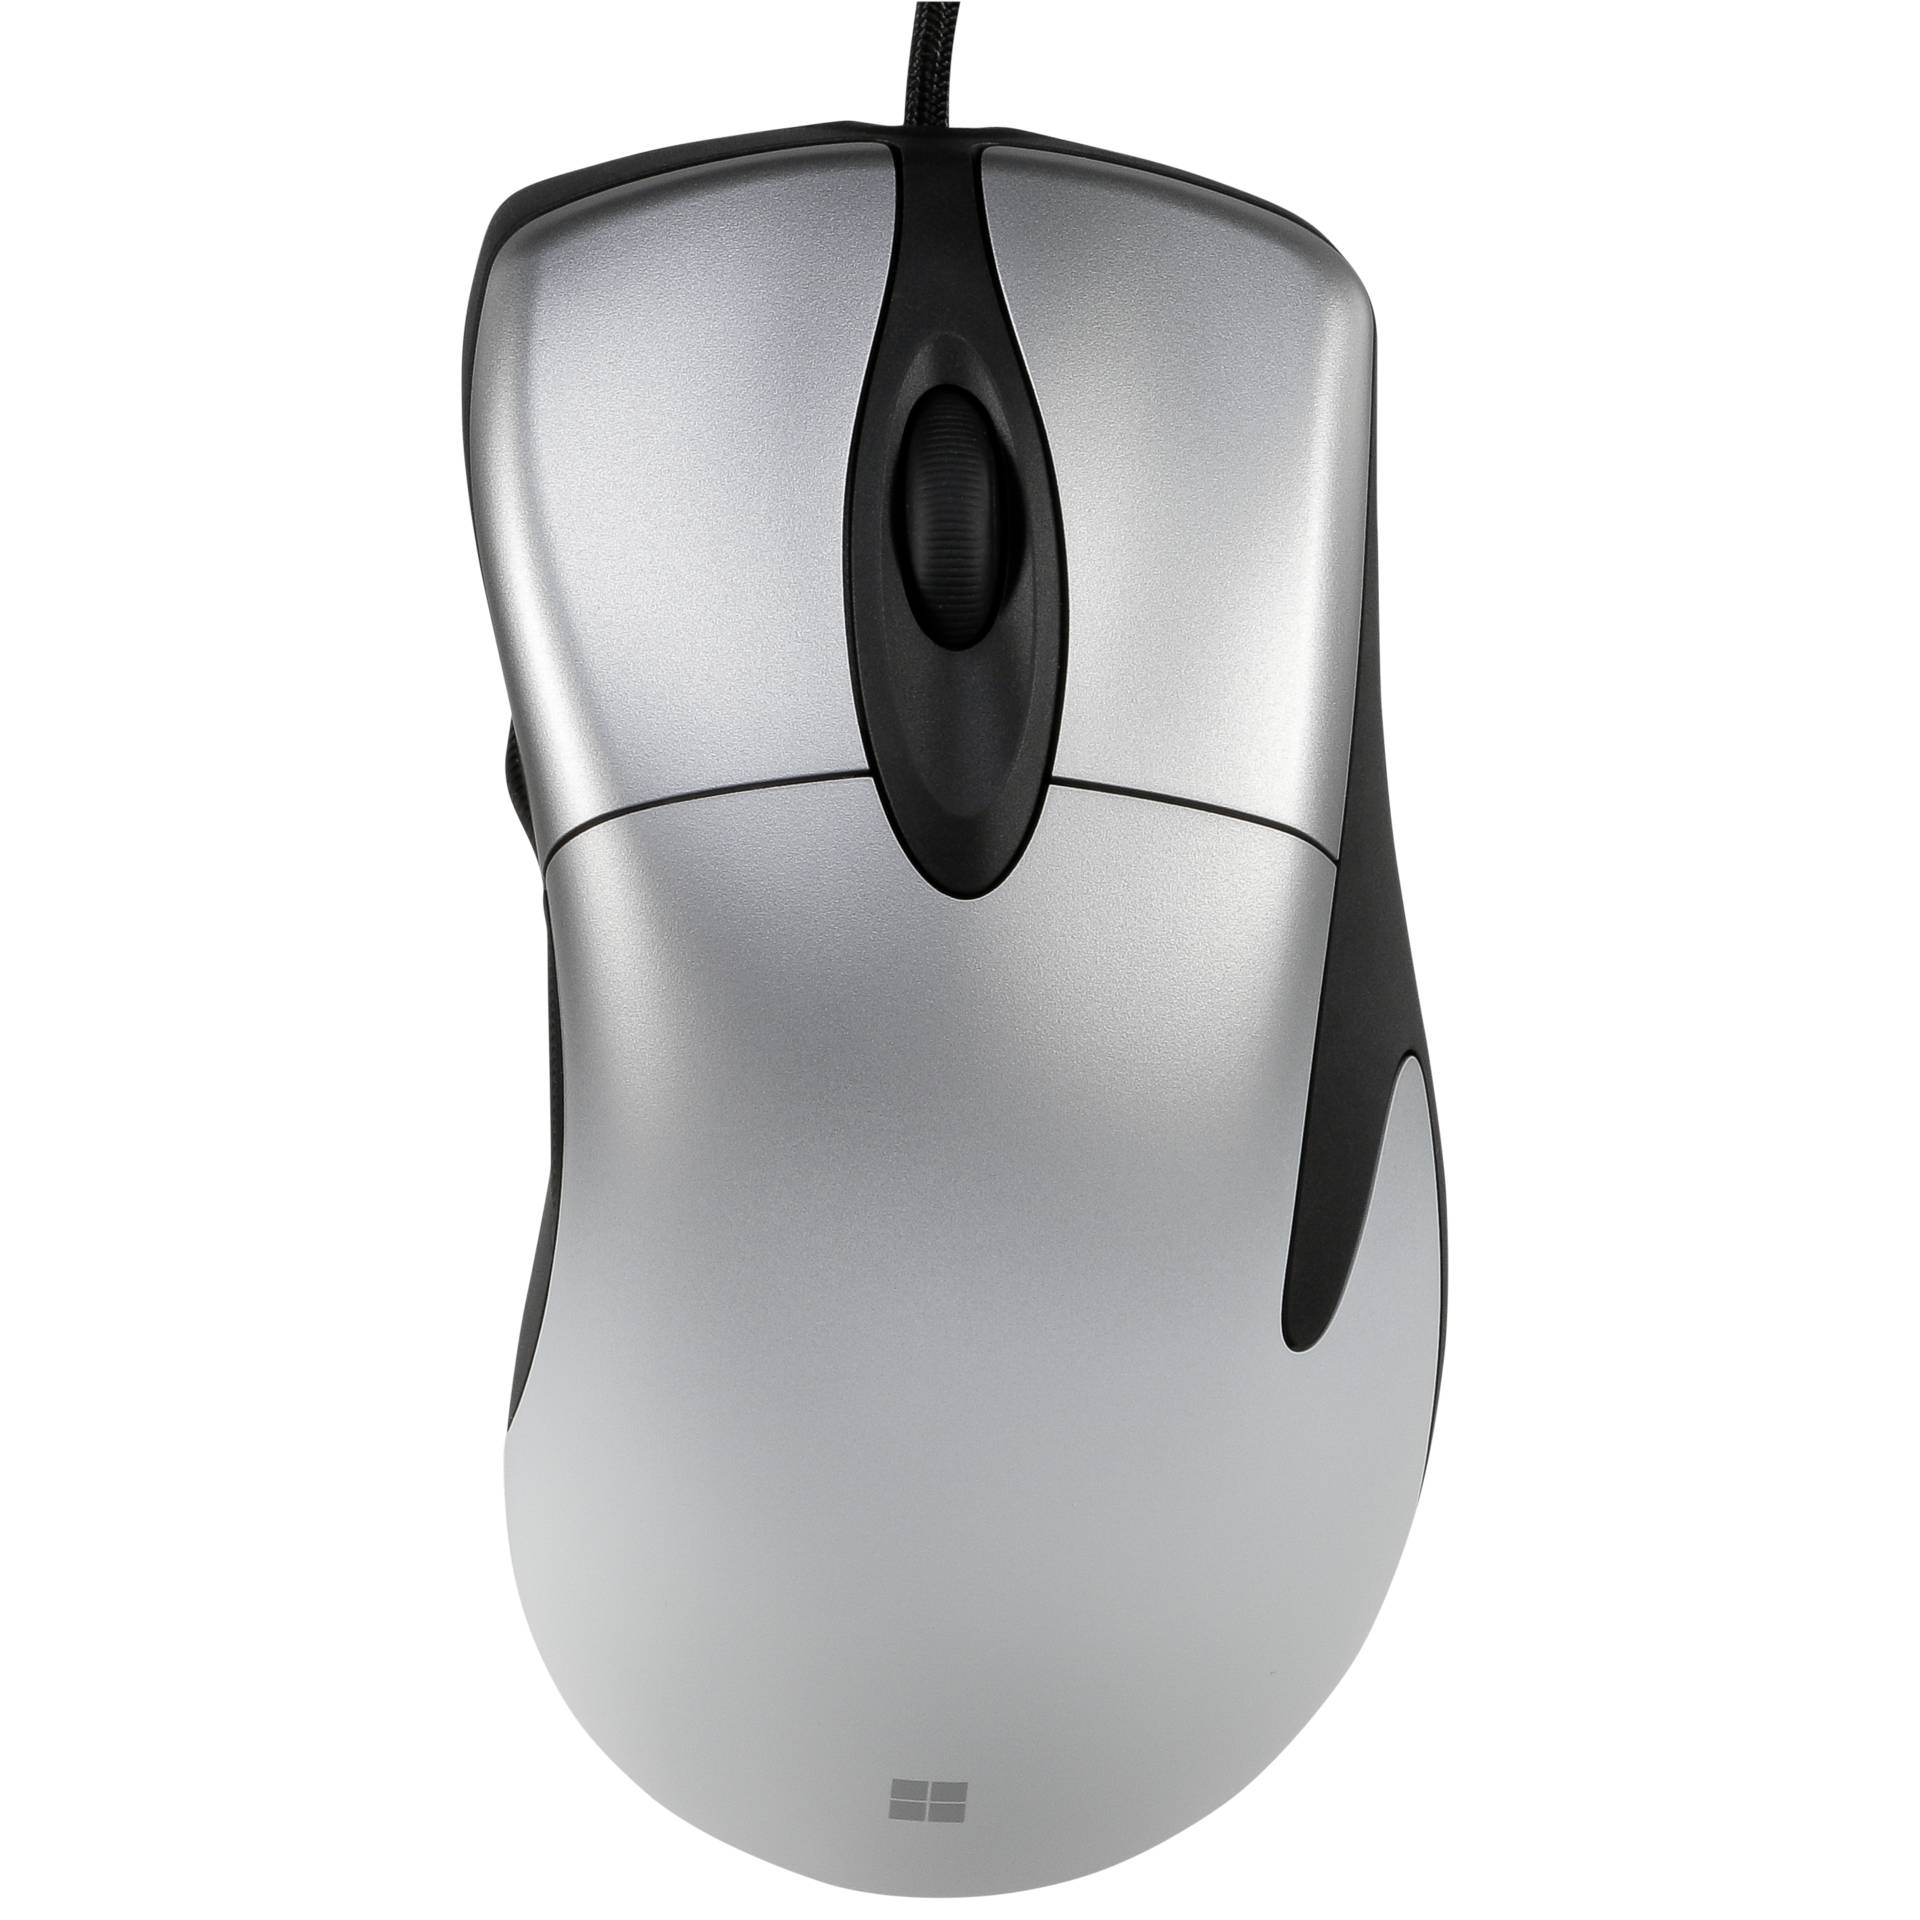 bei Maus Mouse 4500 Microsoft günstig beidhändig Comfort